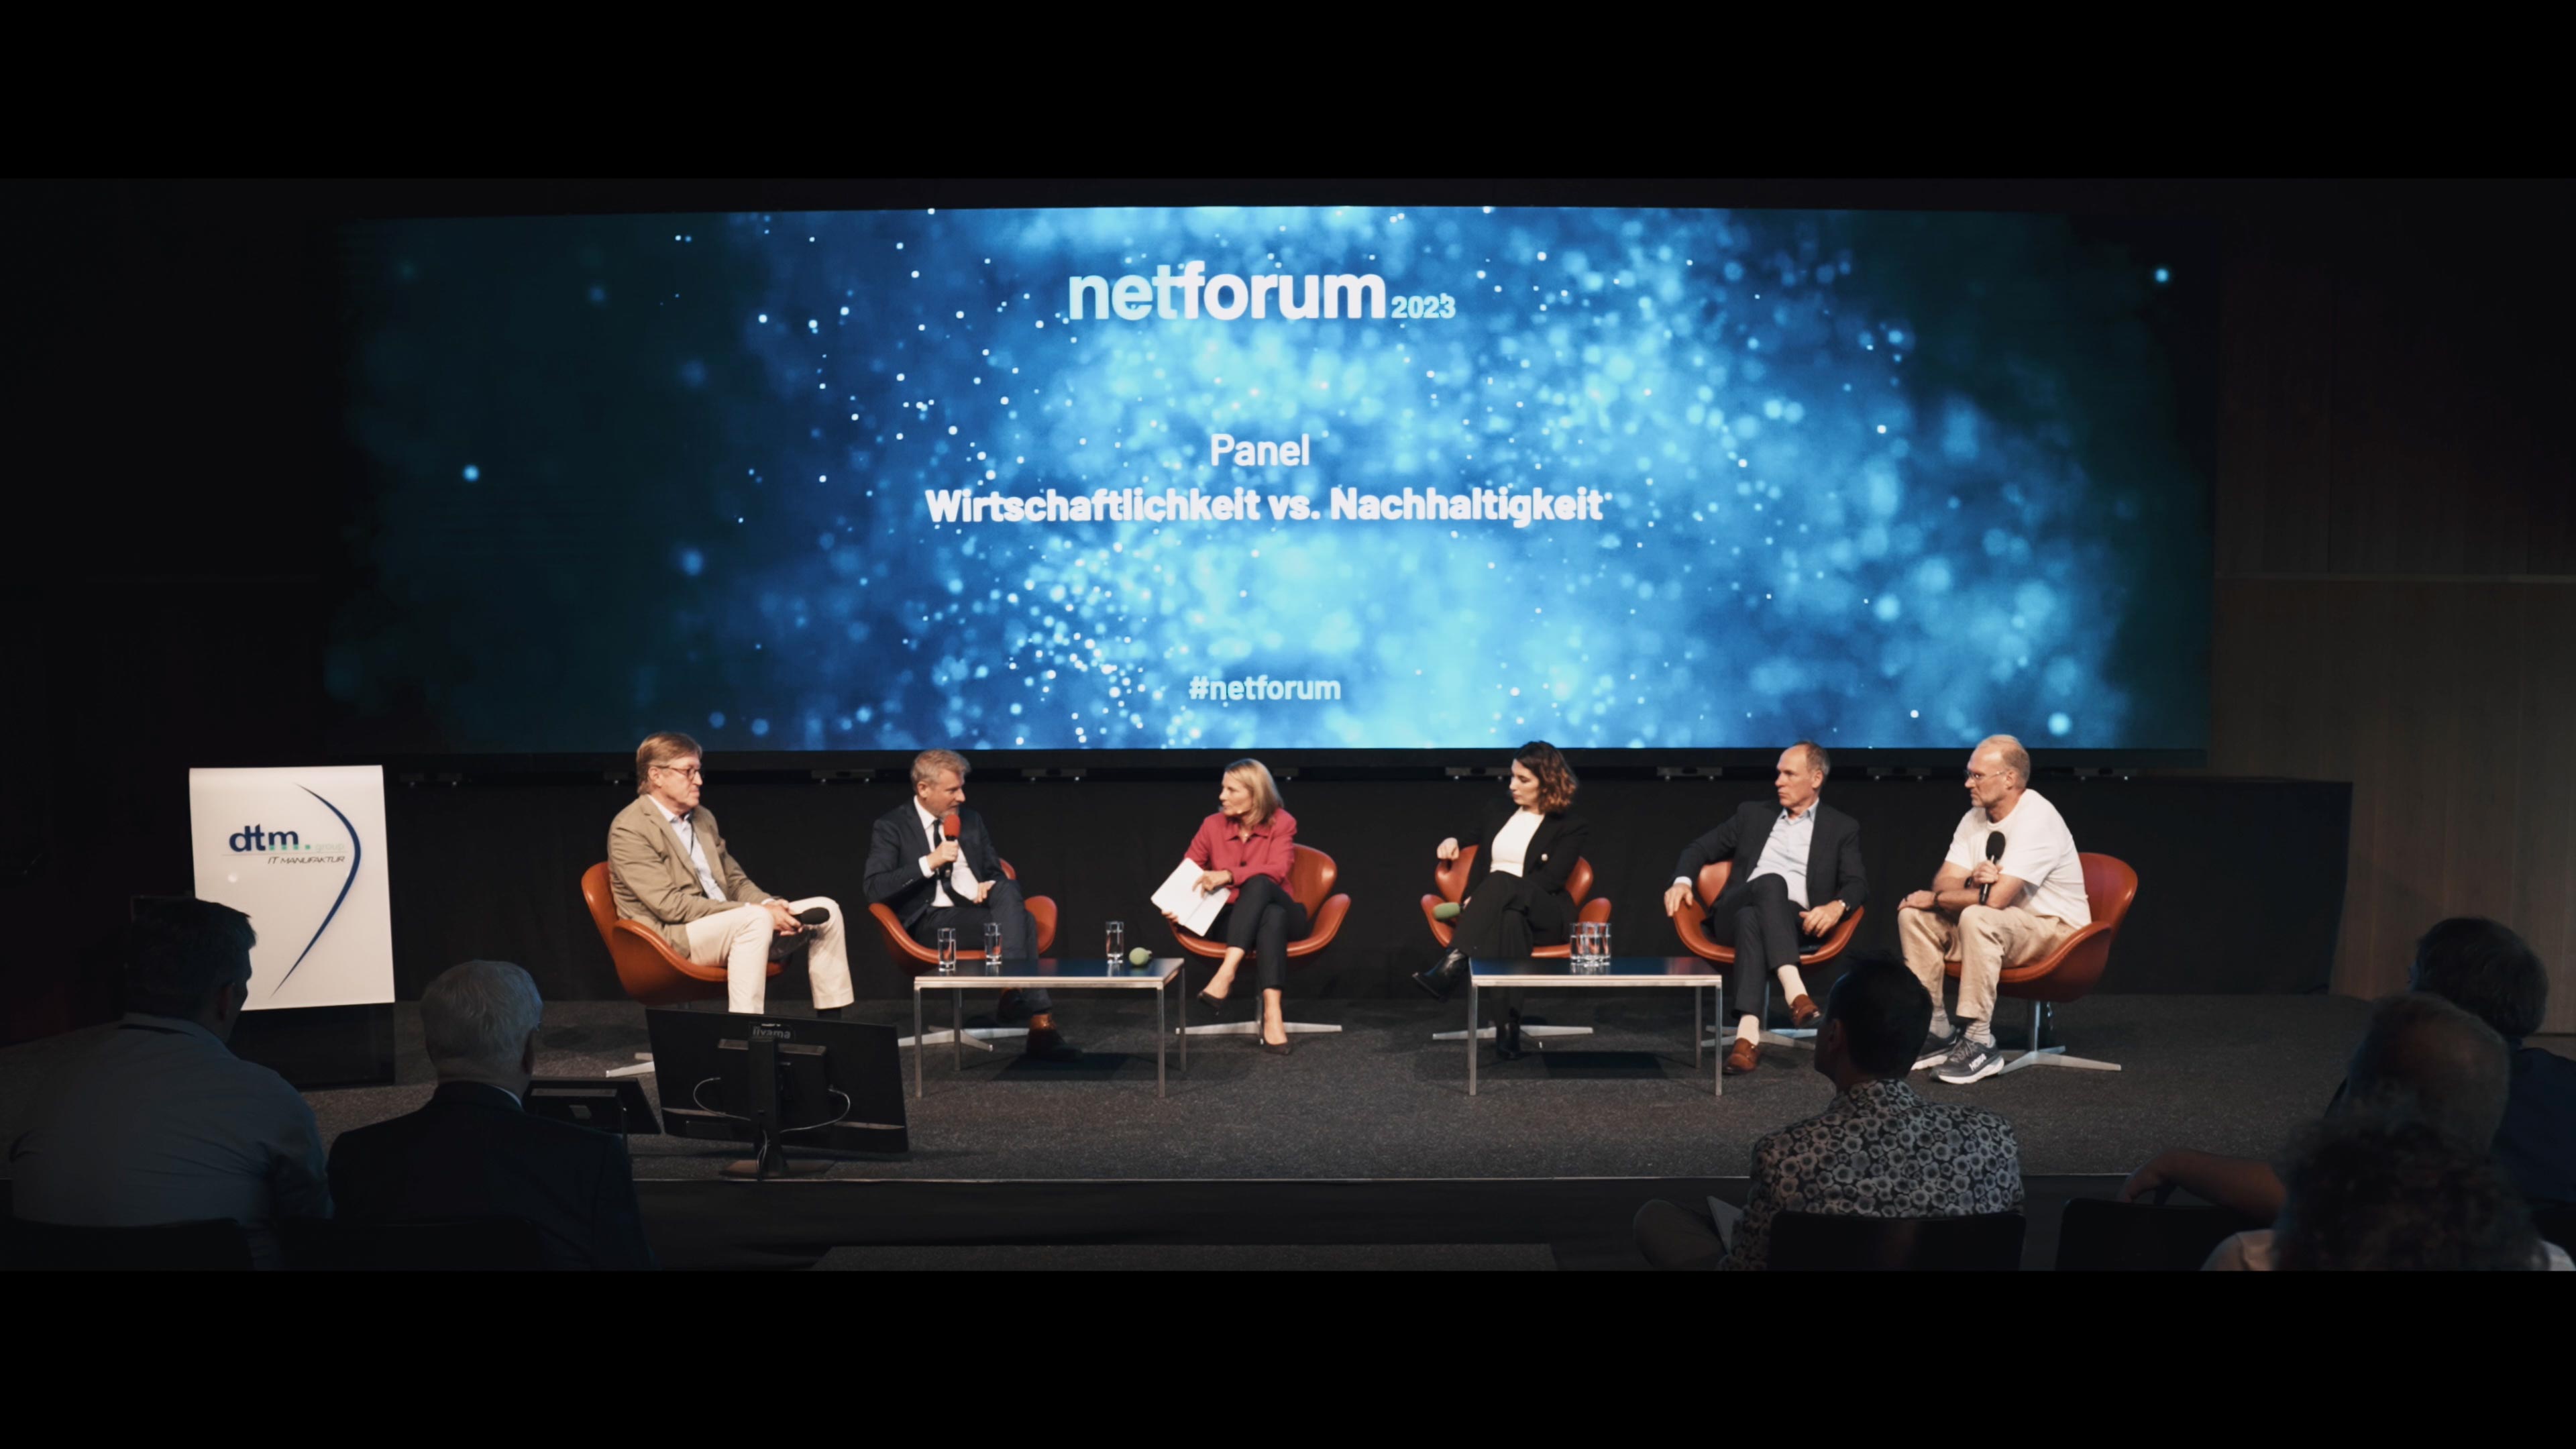 netforum 2023 – Strategy – Panel Discussion